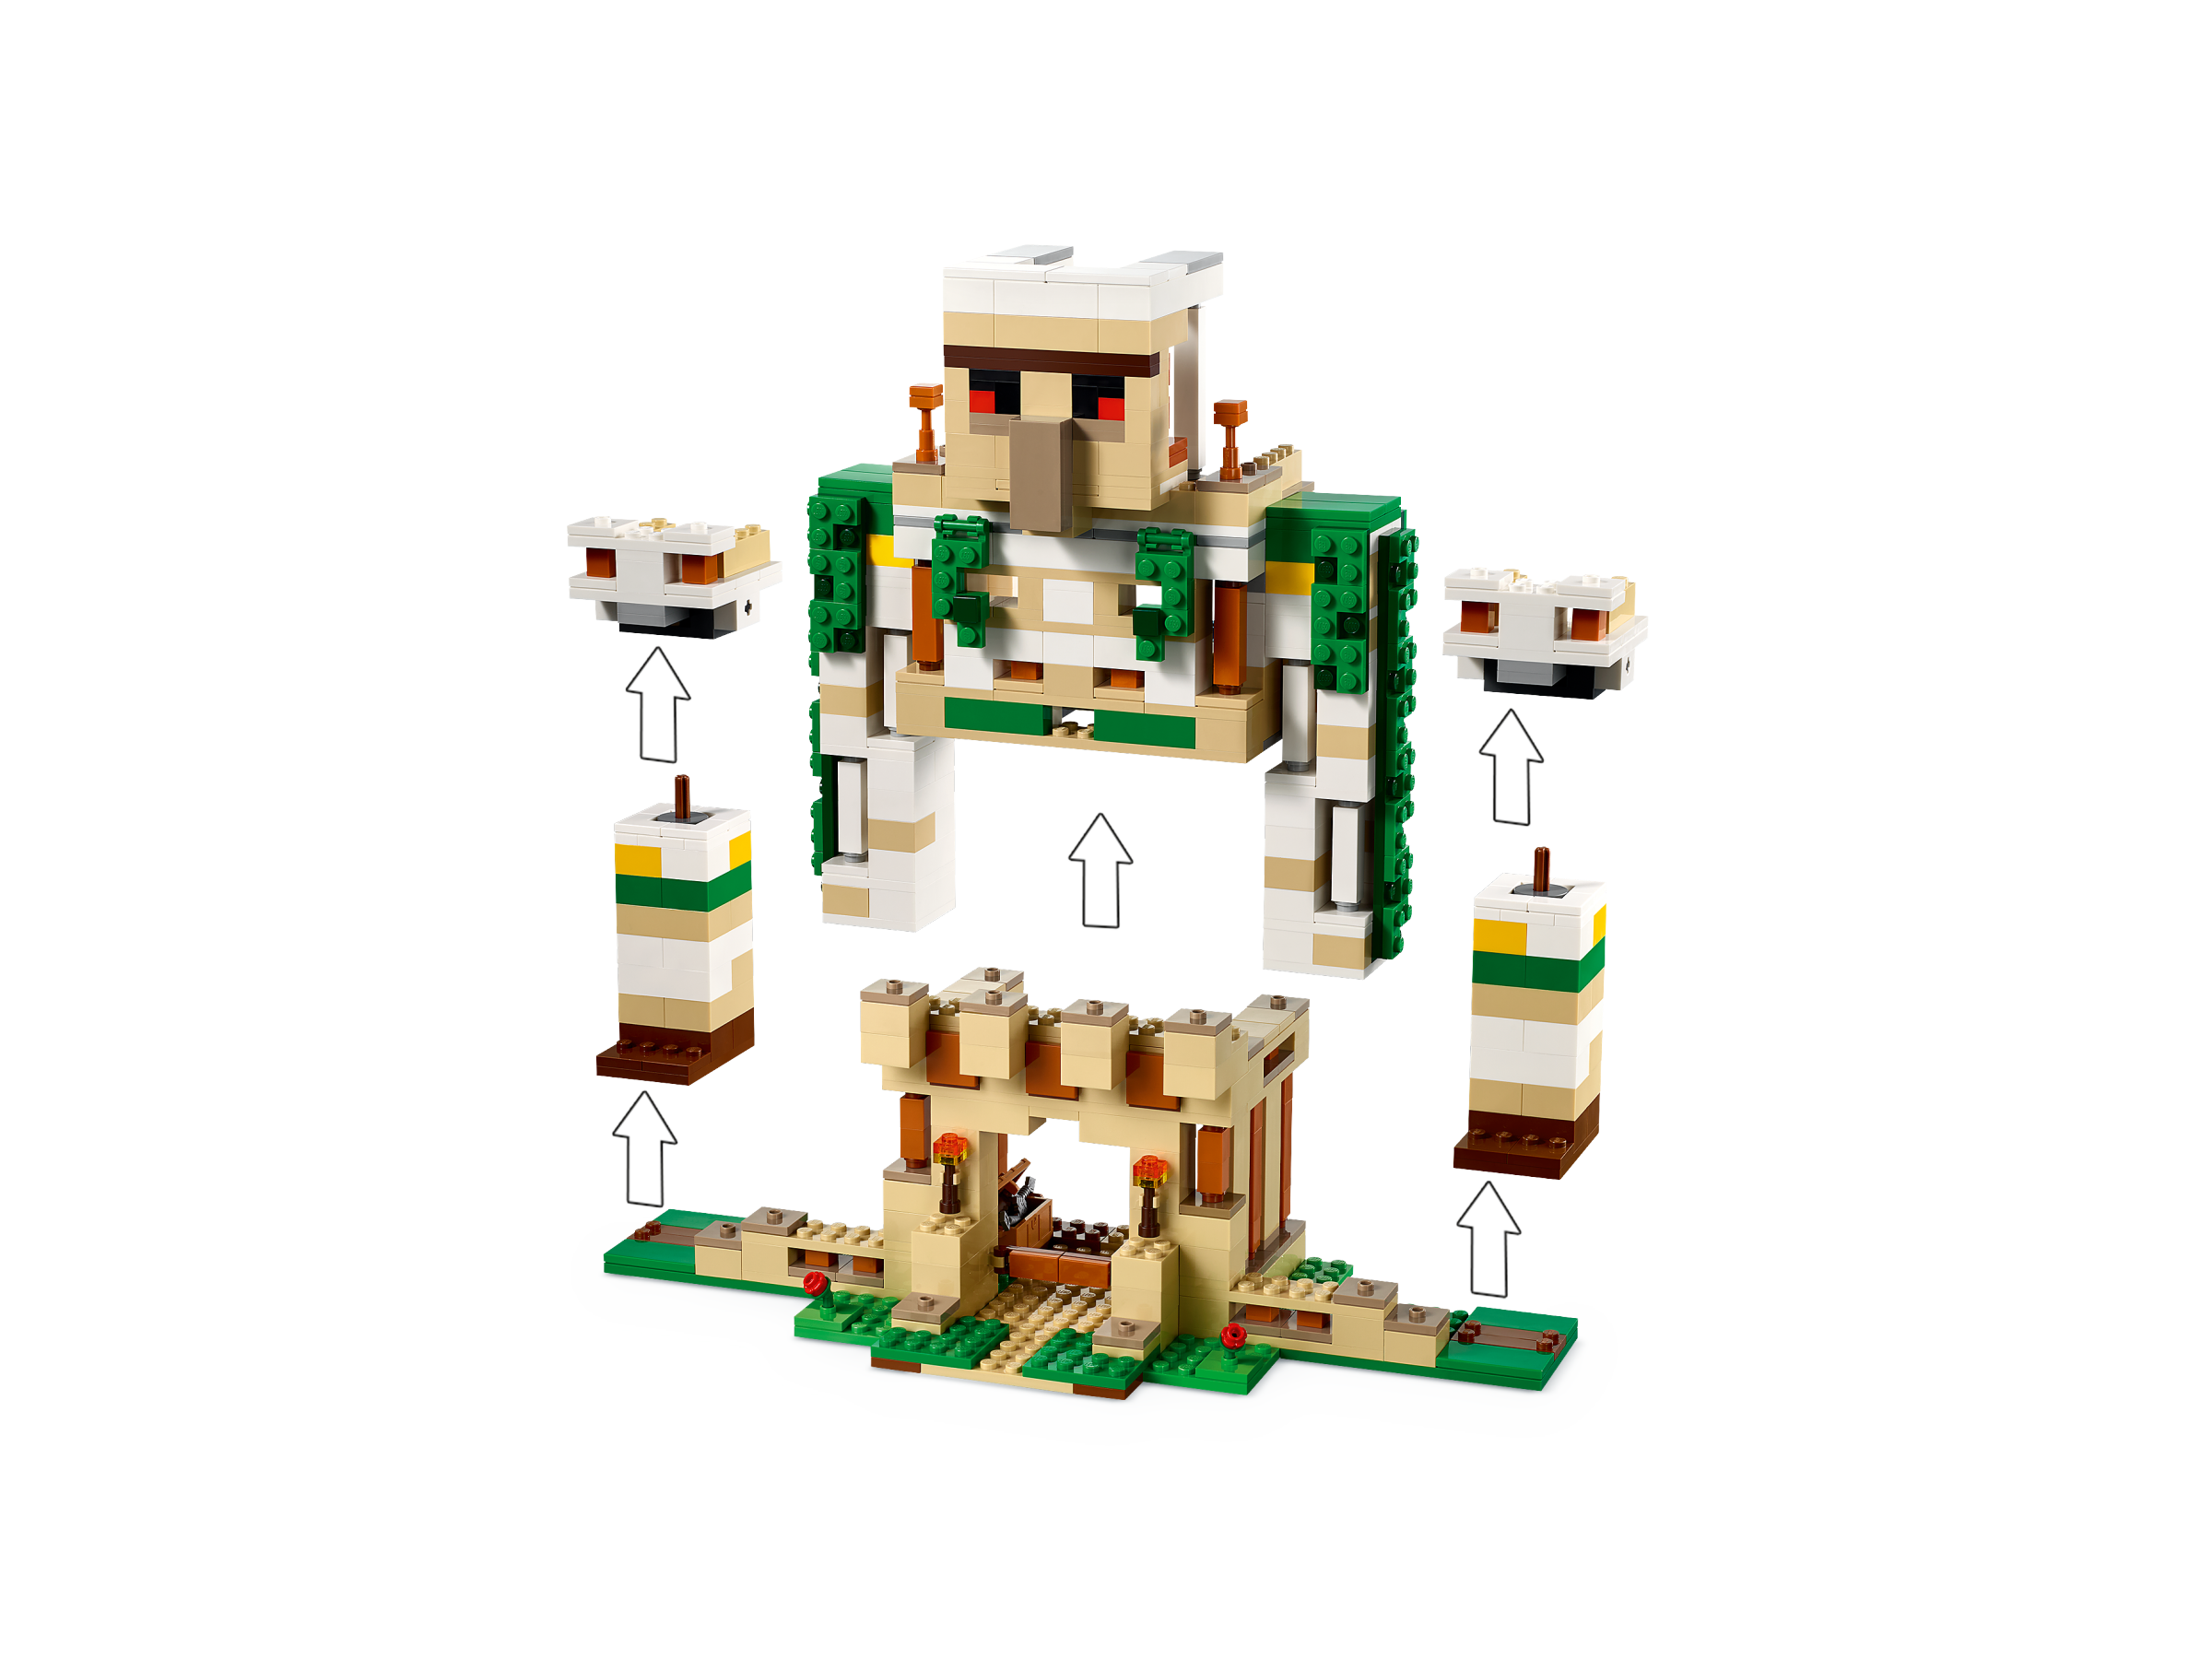 Lego Minecraft Iron Golem Castle 21250 Shop Now